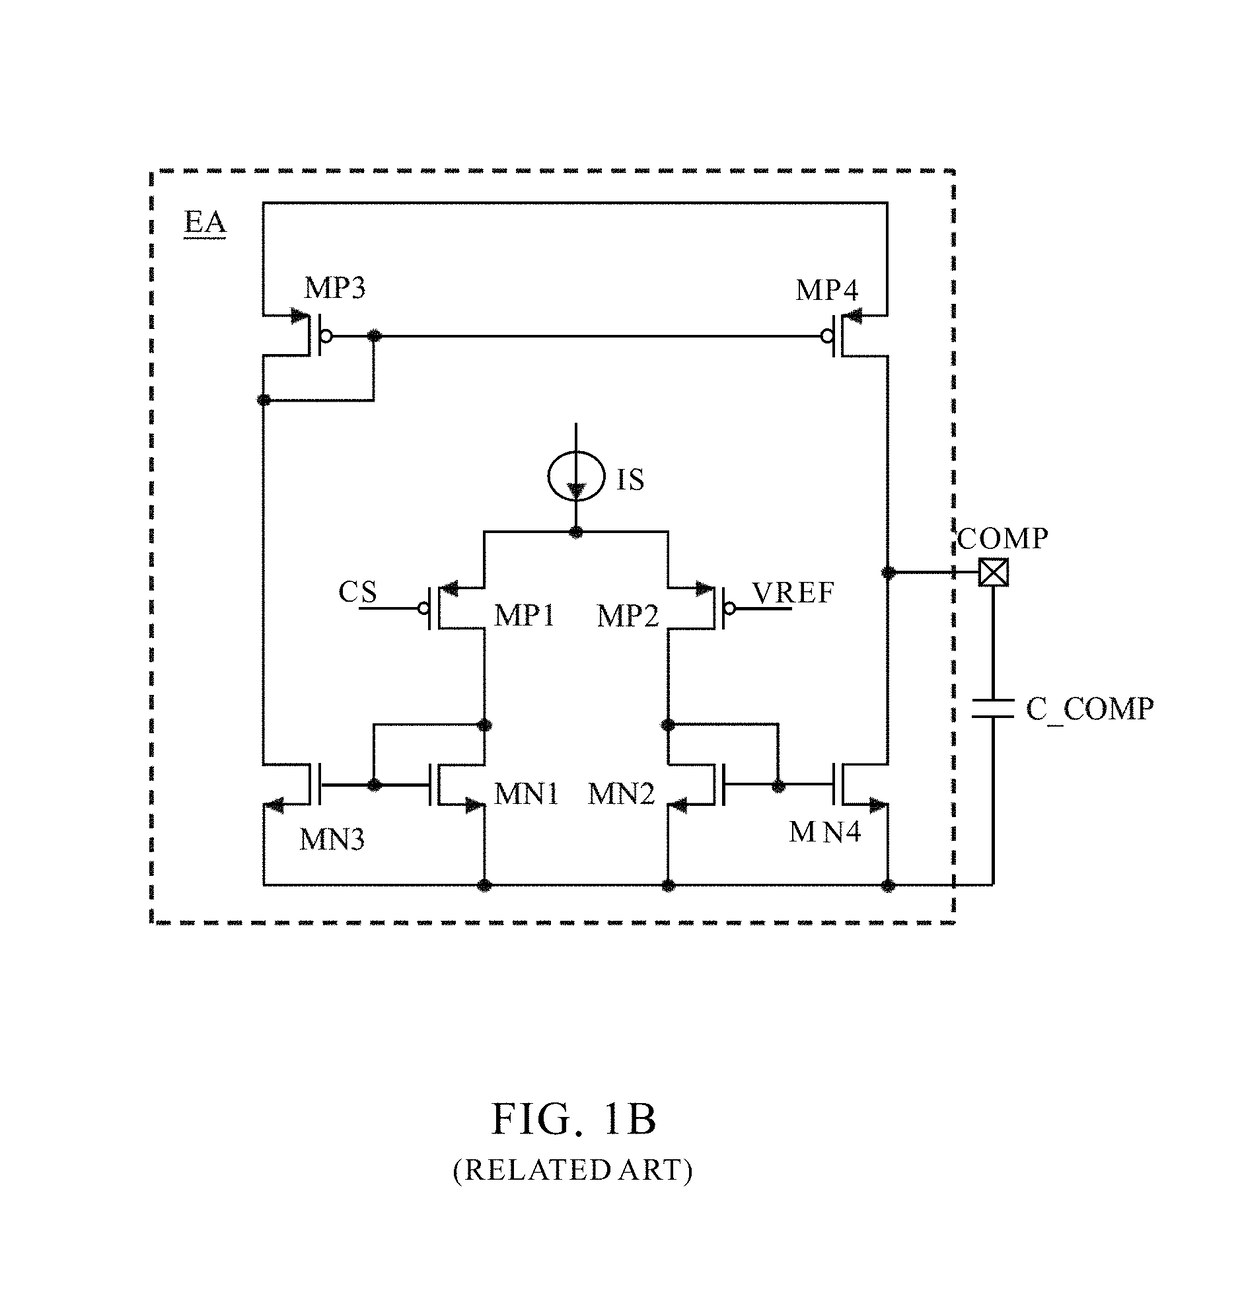 Compensation circuit for input voltage offset of error amplifier and error amplifier circuit